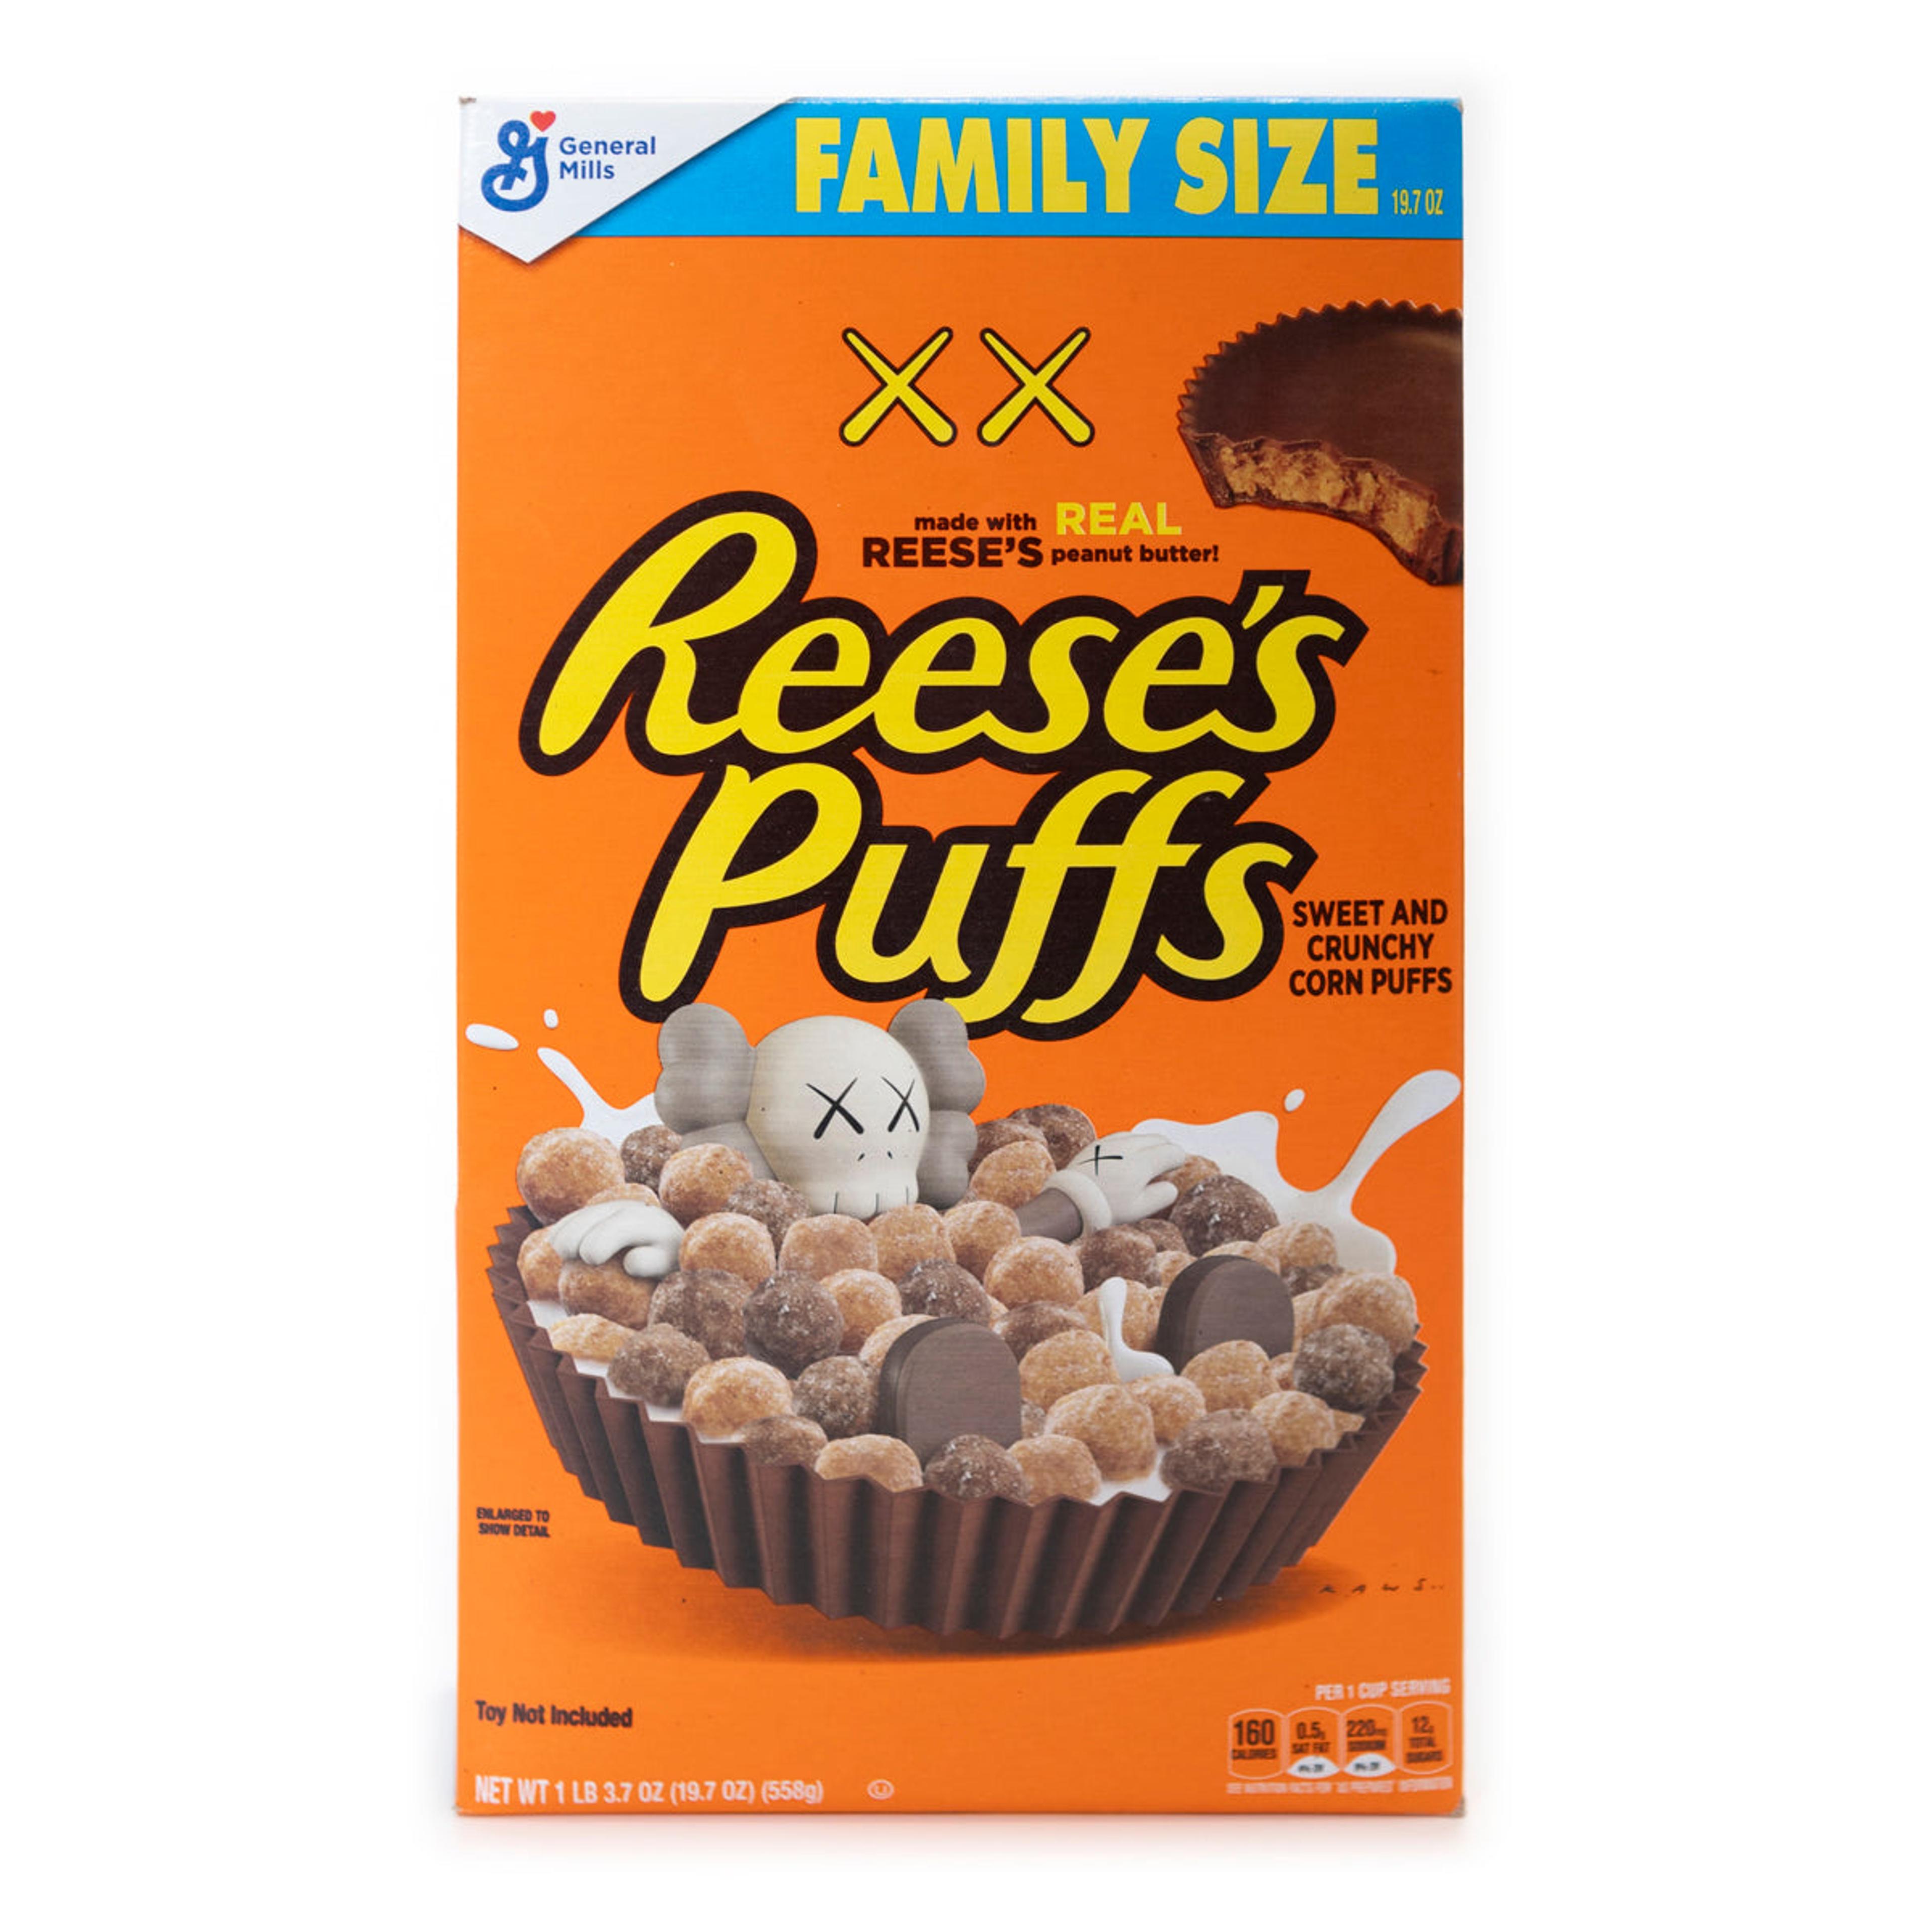 KAWS x Reese's Puffs Family Size